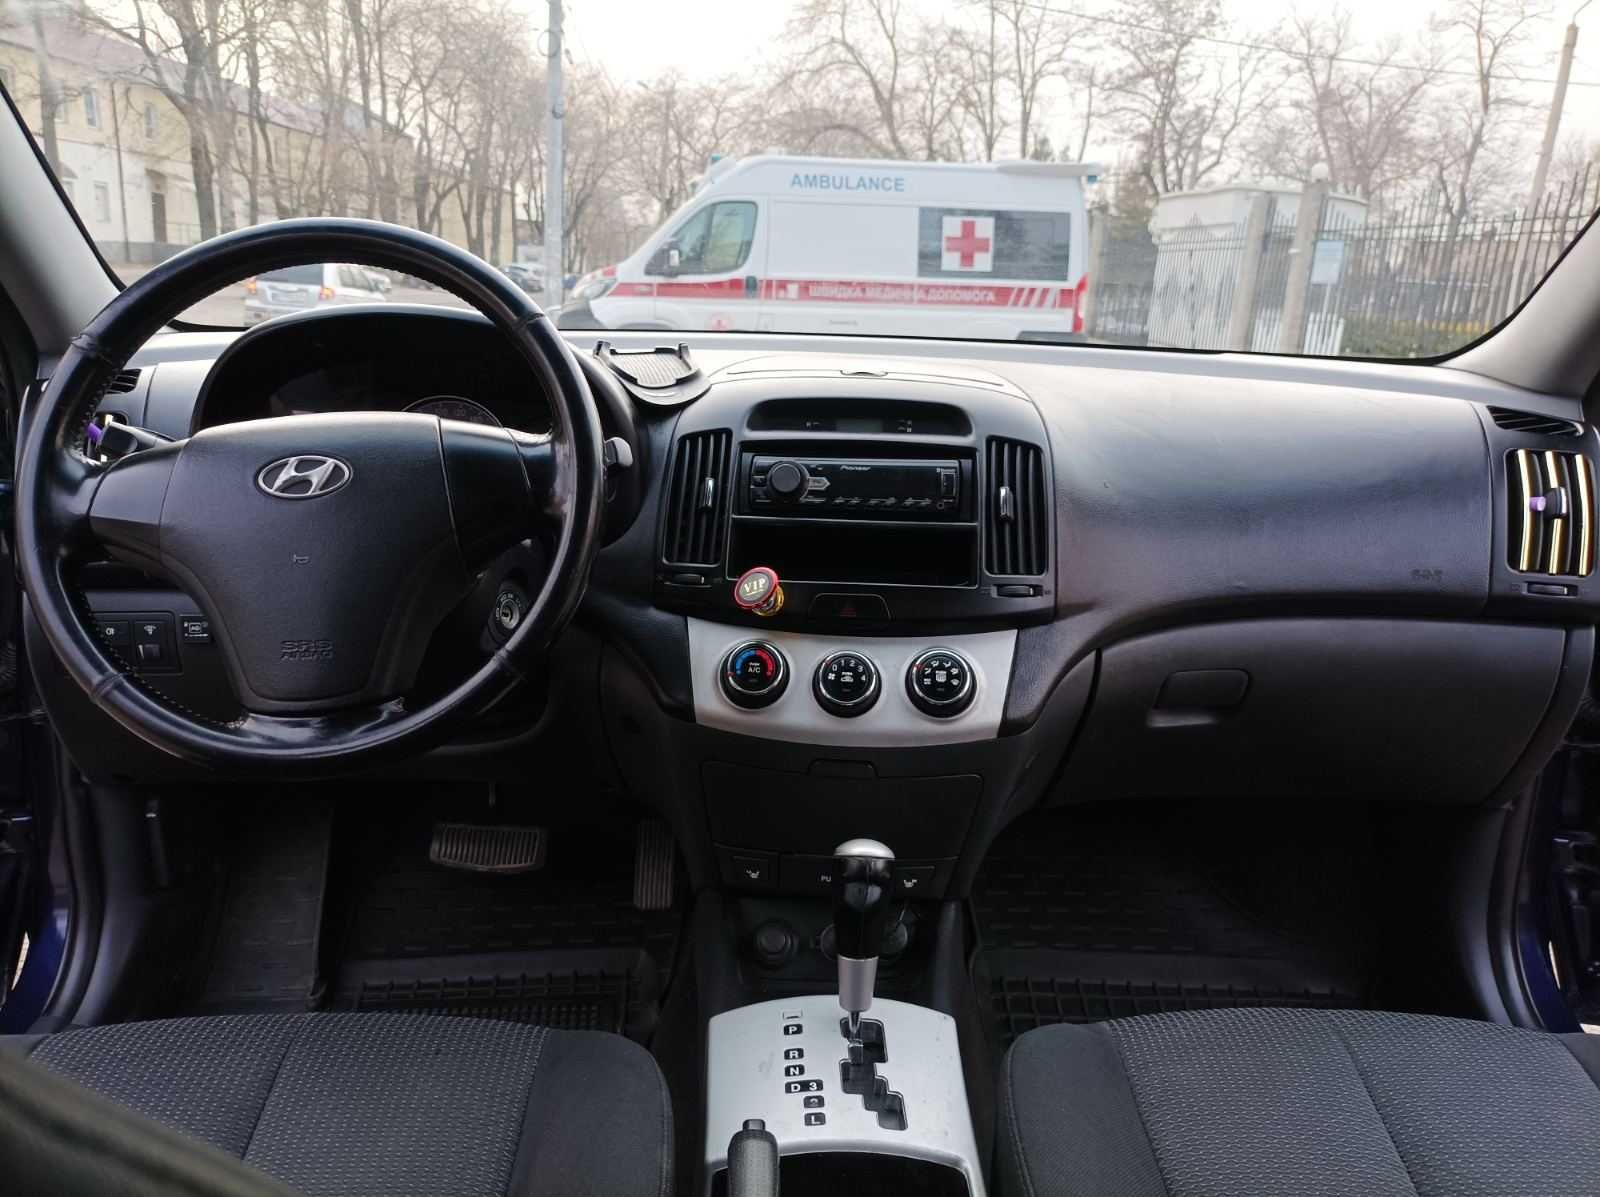 Hyundai Elantra, коробка передач
Автомат